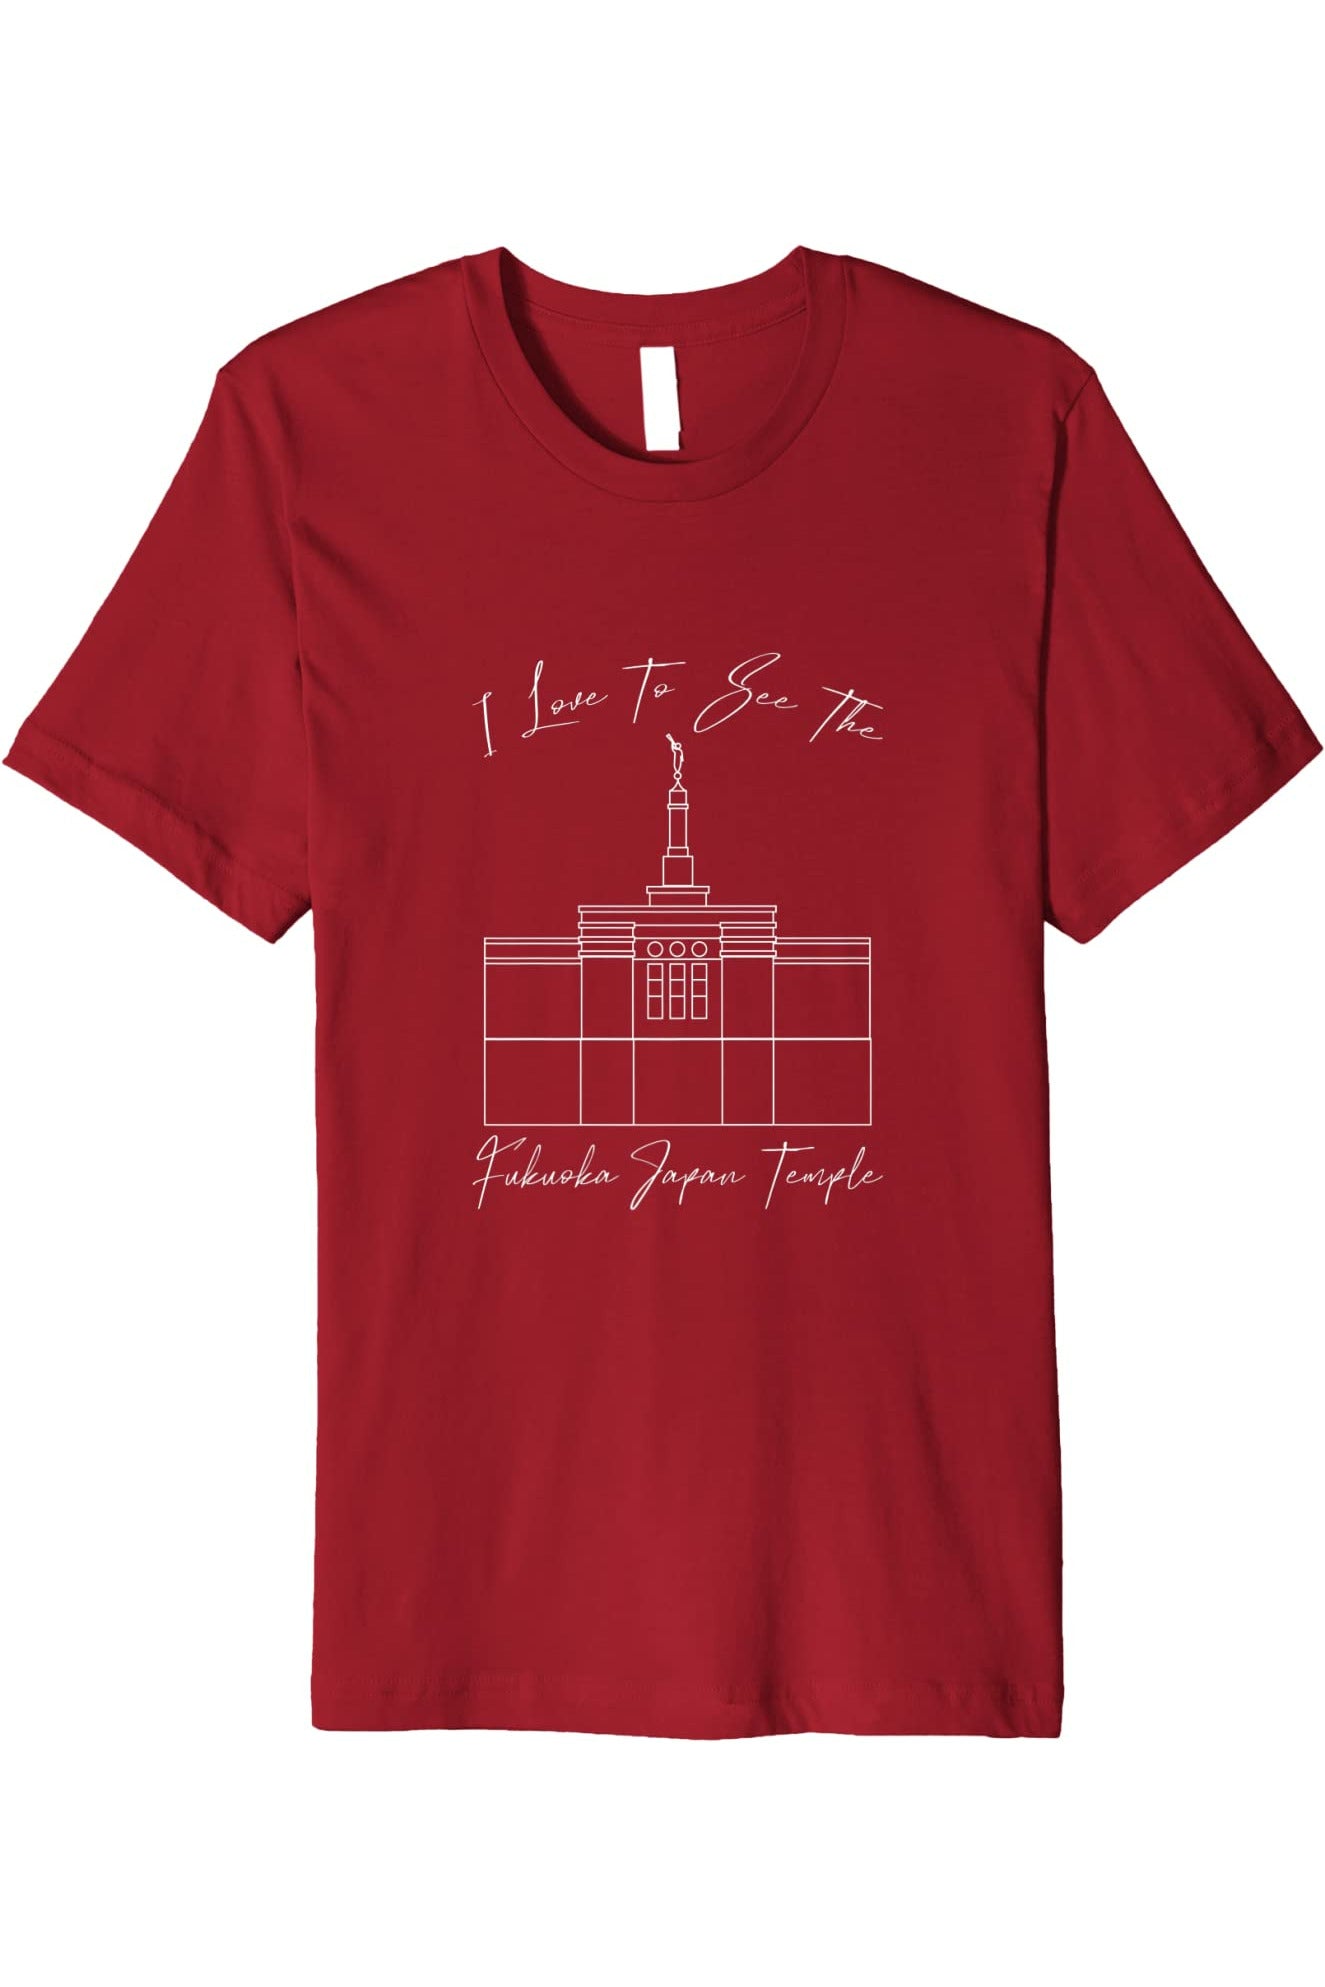 Fukuoka Japan Temple T-Shirt - Premium - Calligraphy Style (English) US